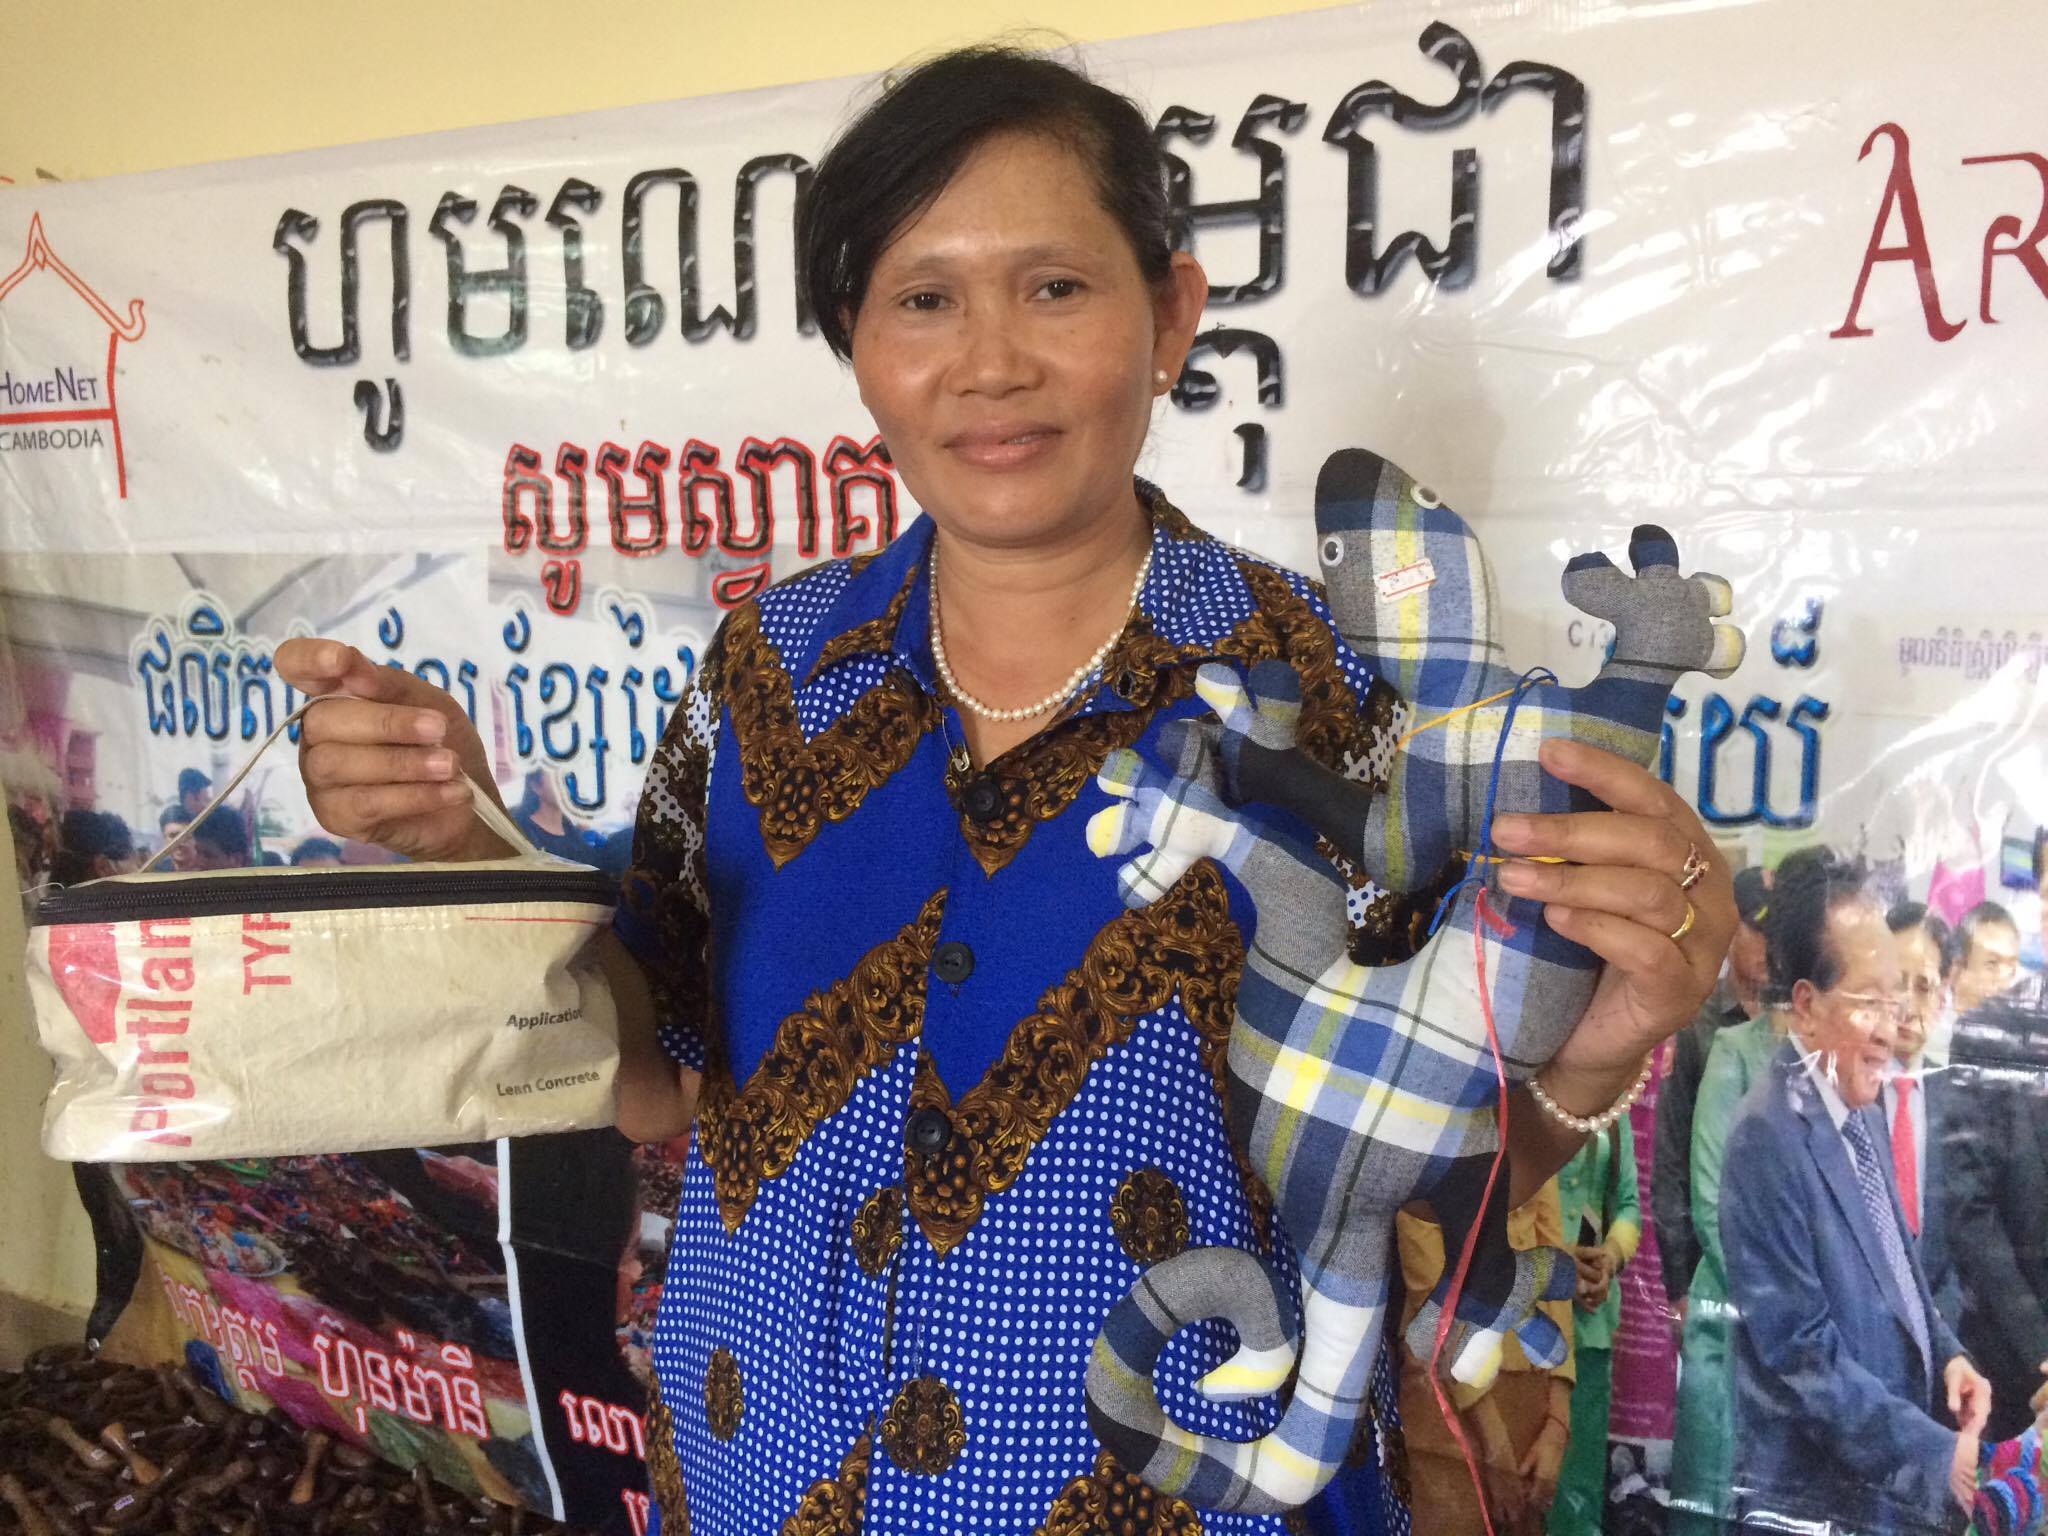 Name: Yun SopheaBusiness Name: Cambodia Bracelets from Yarn MaterialsProgram: Incubator Program